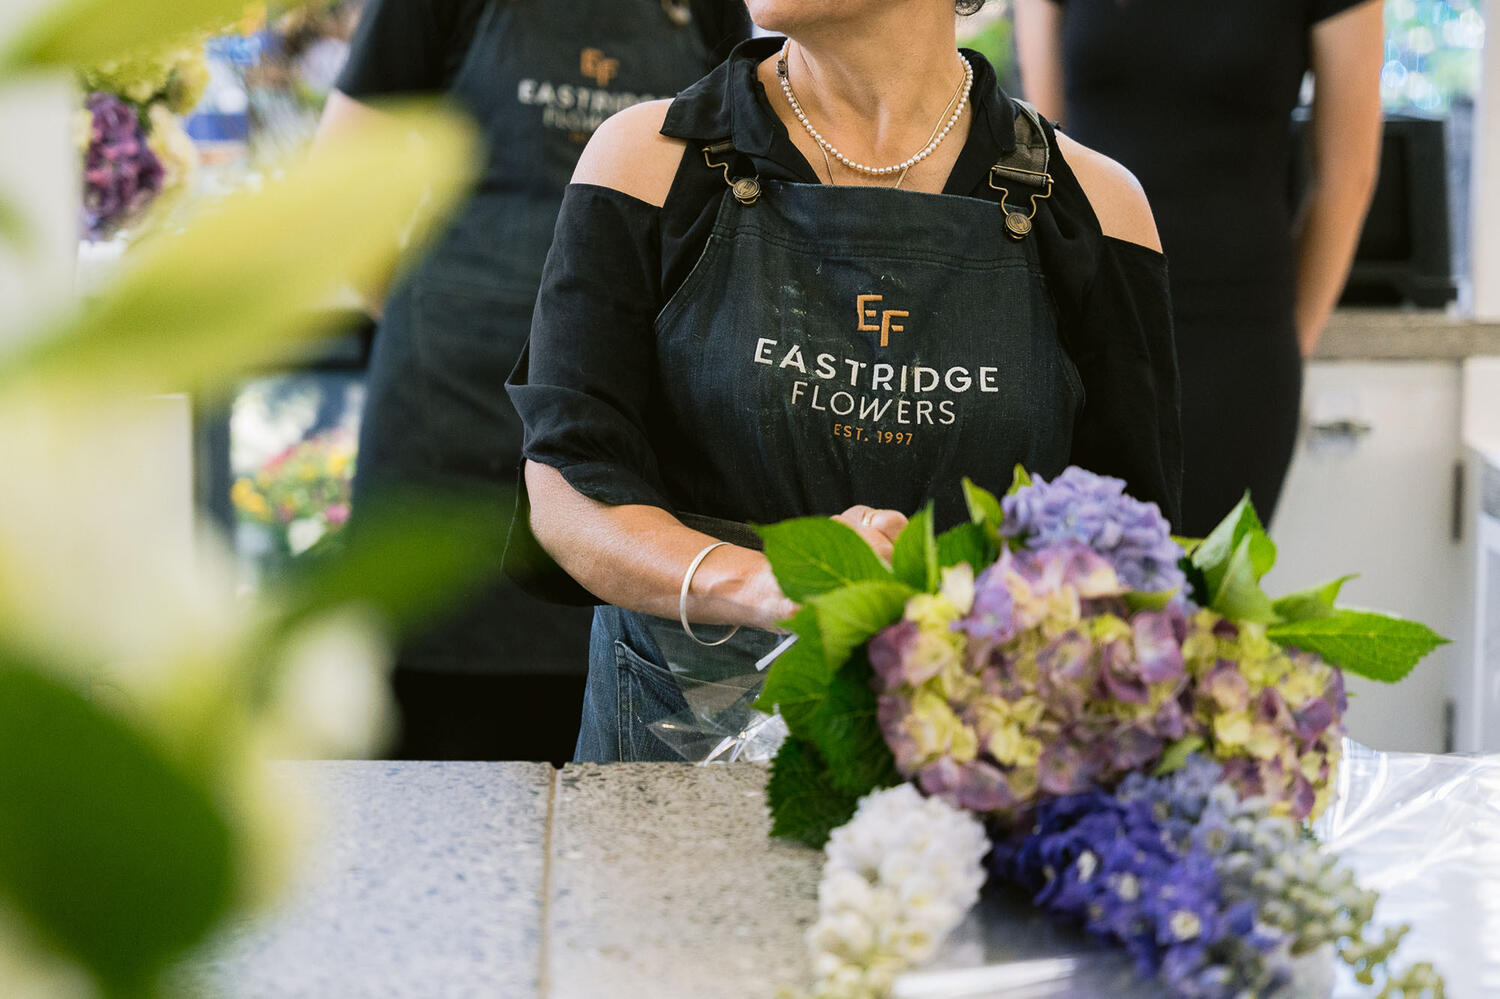 Eastridge Flowers Web5 Kakapo Business Sales